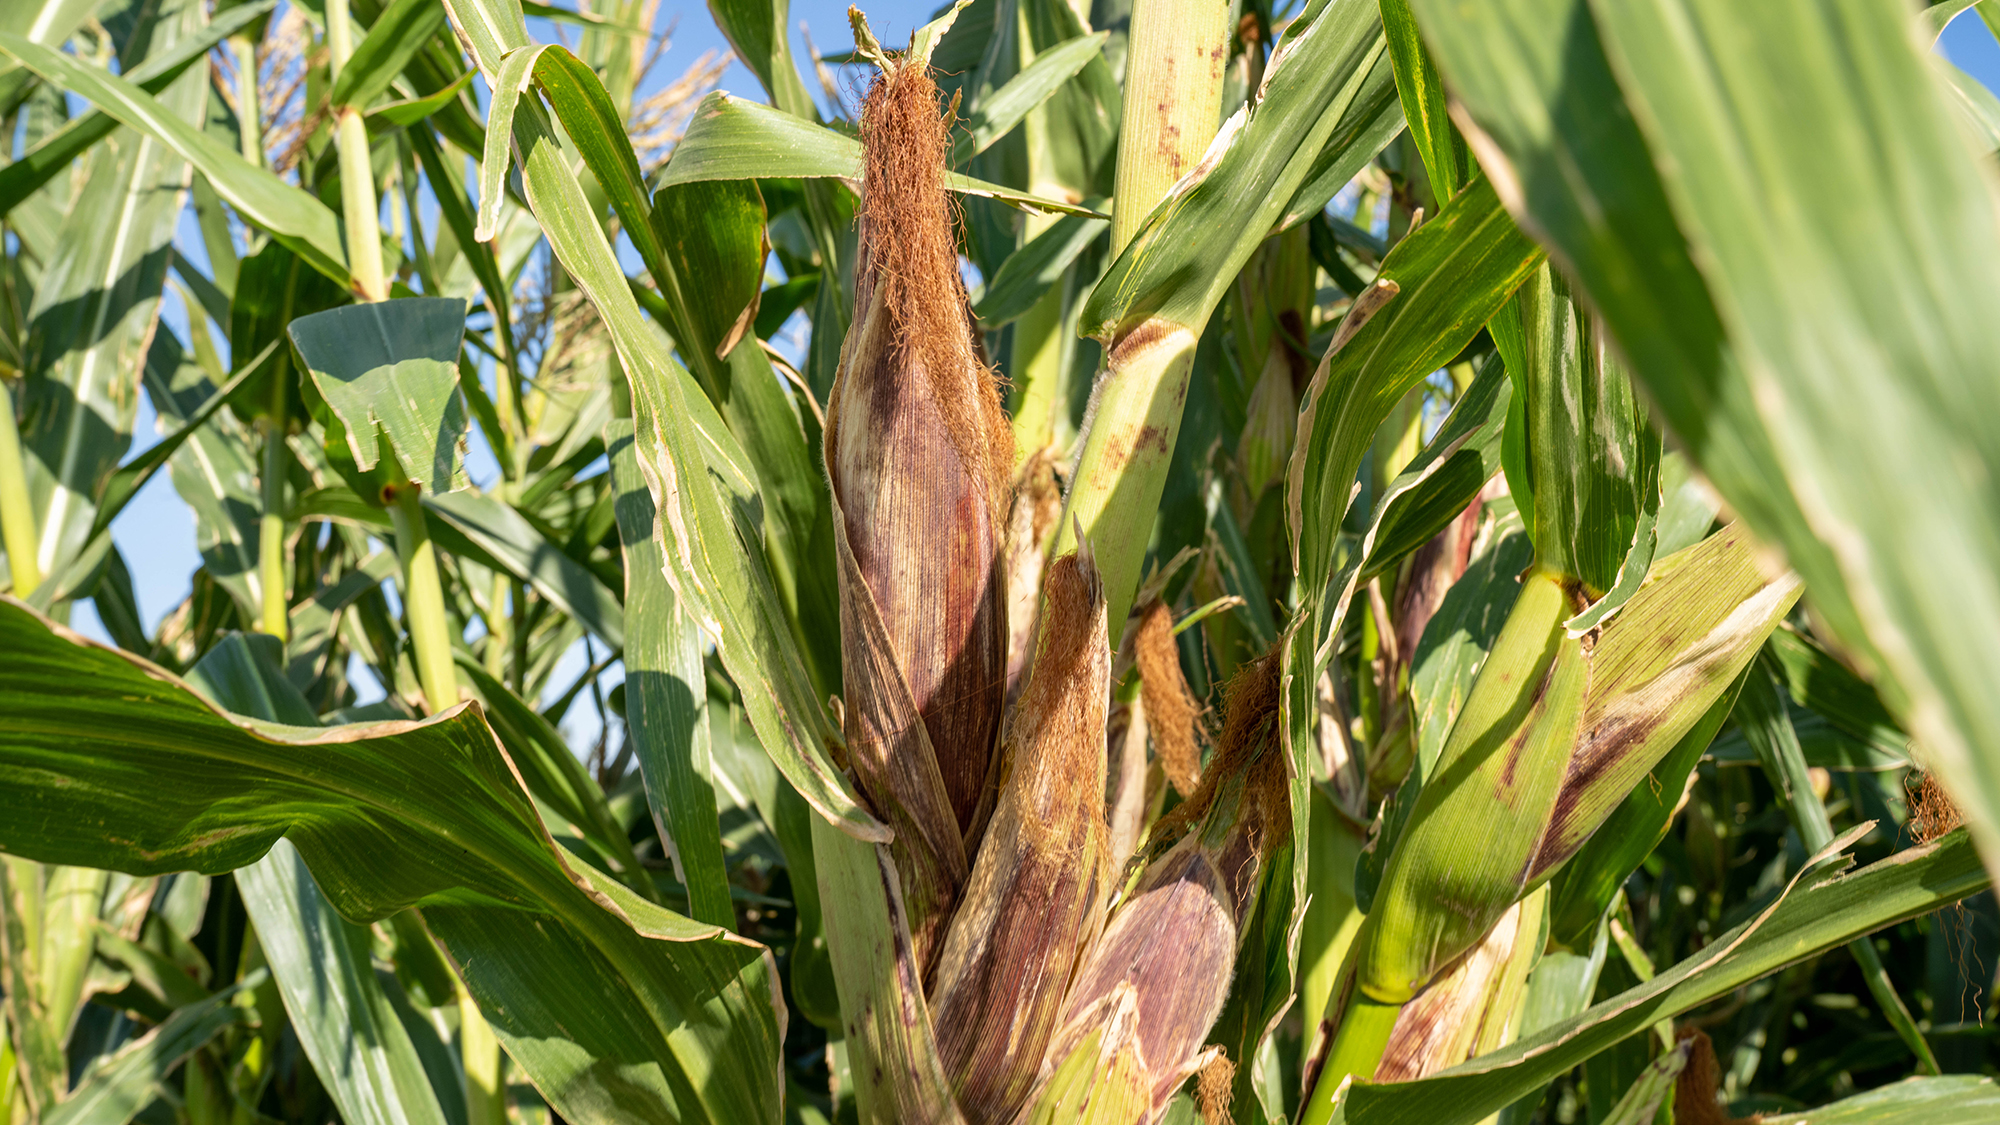 Closeup shot of a maize plant